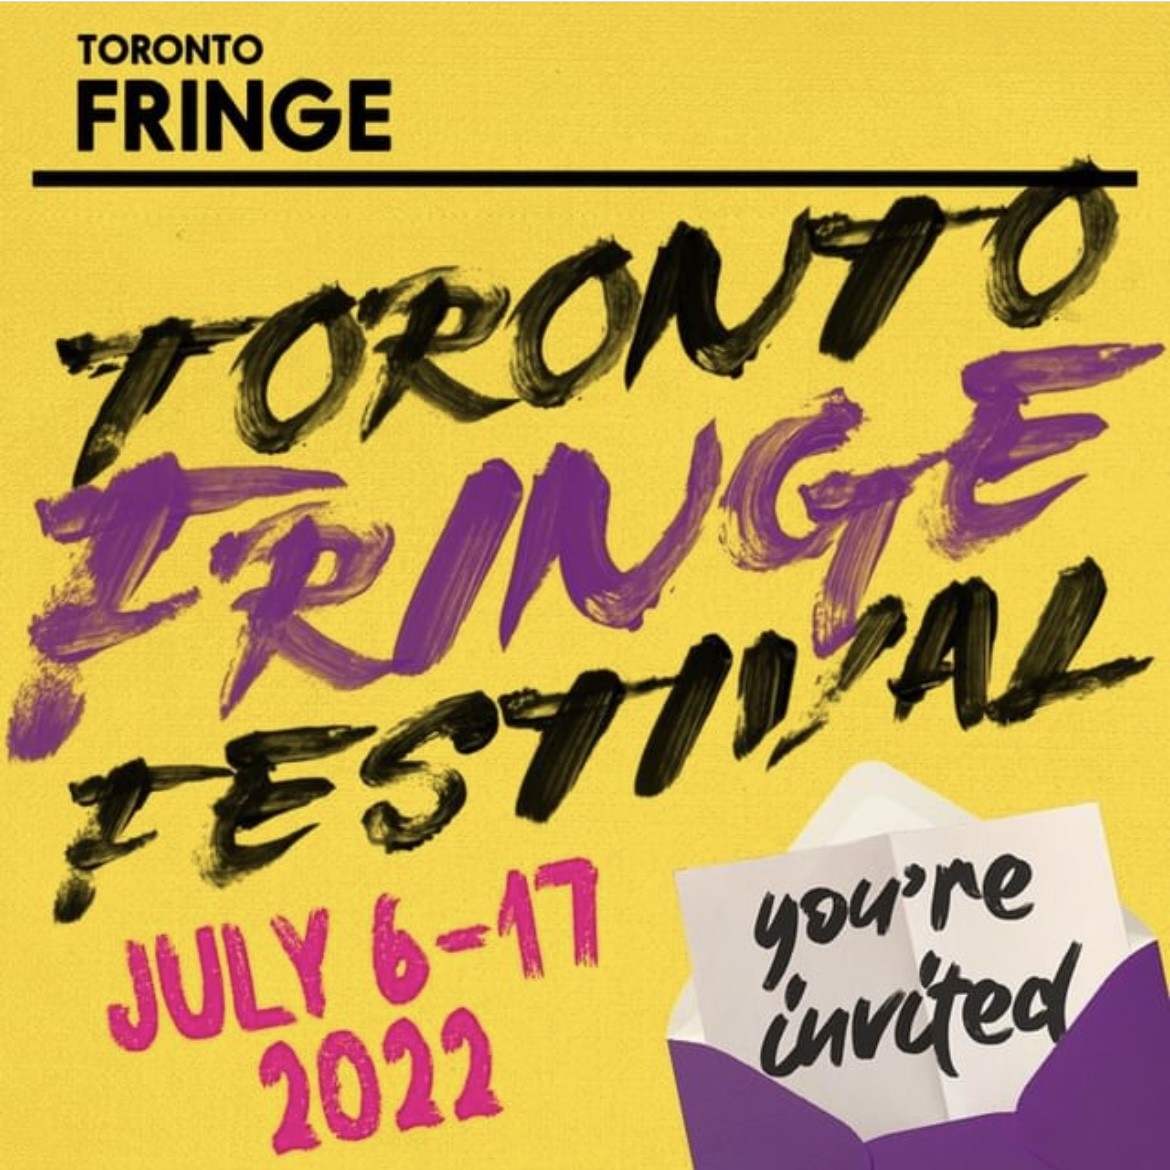 Фестиваль Торонто Фриндж